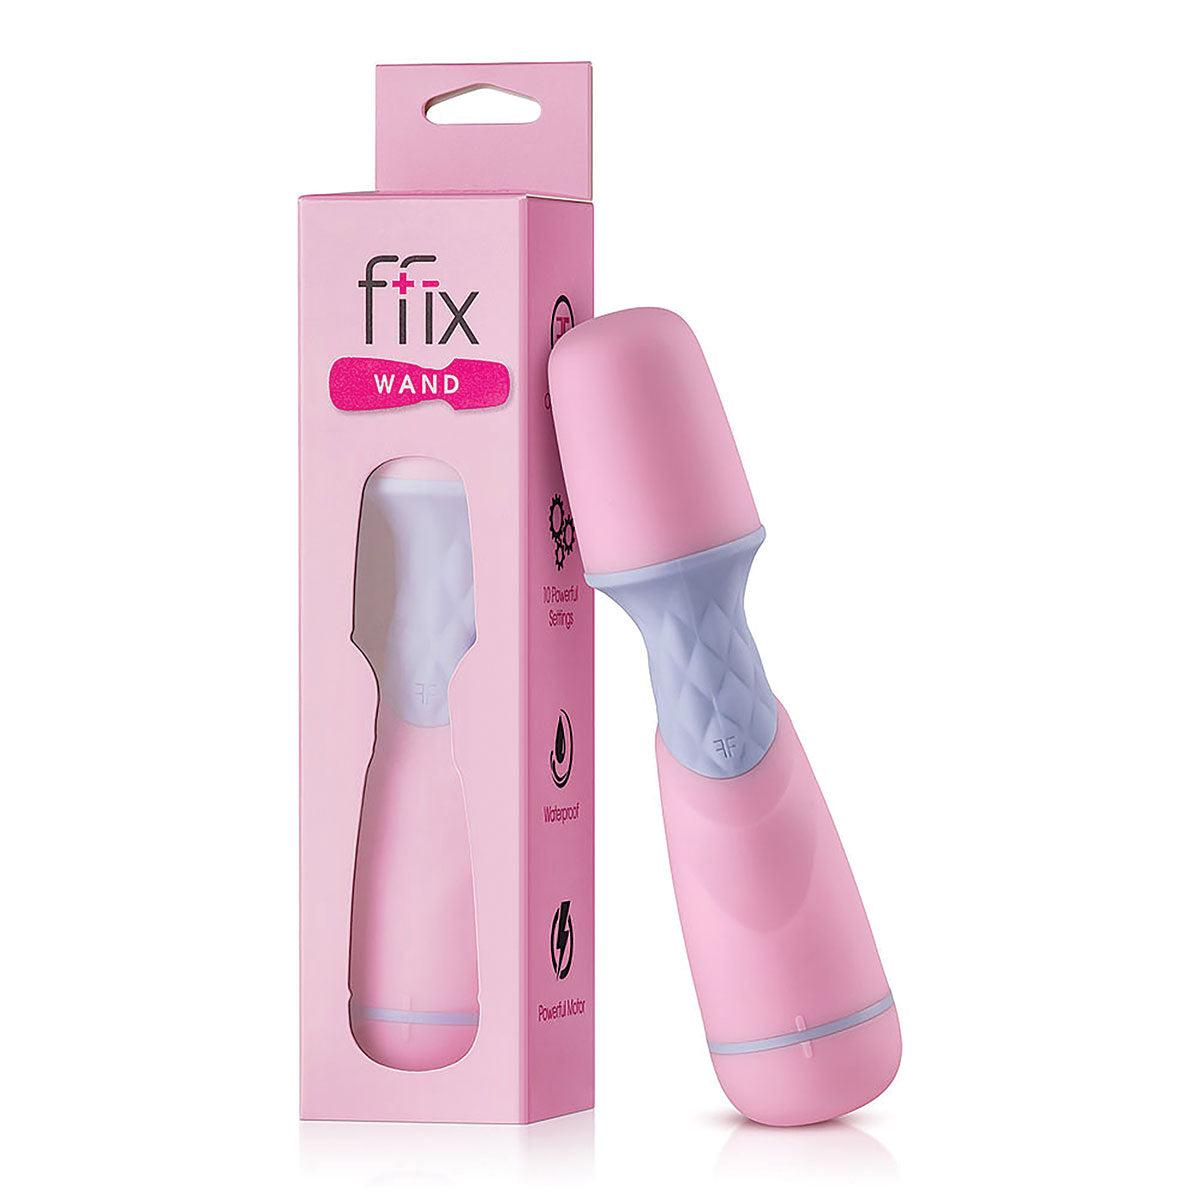 Femme Funn FFIX Wand Mini Pink Intimates Adult Boutique